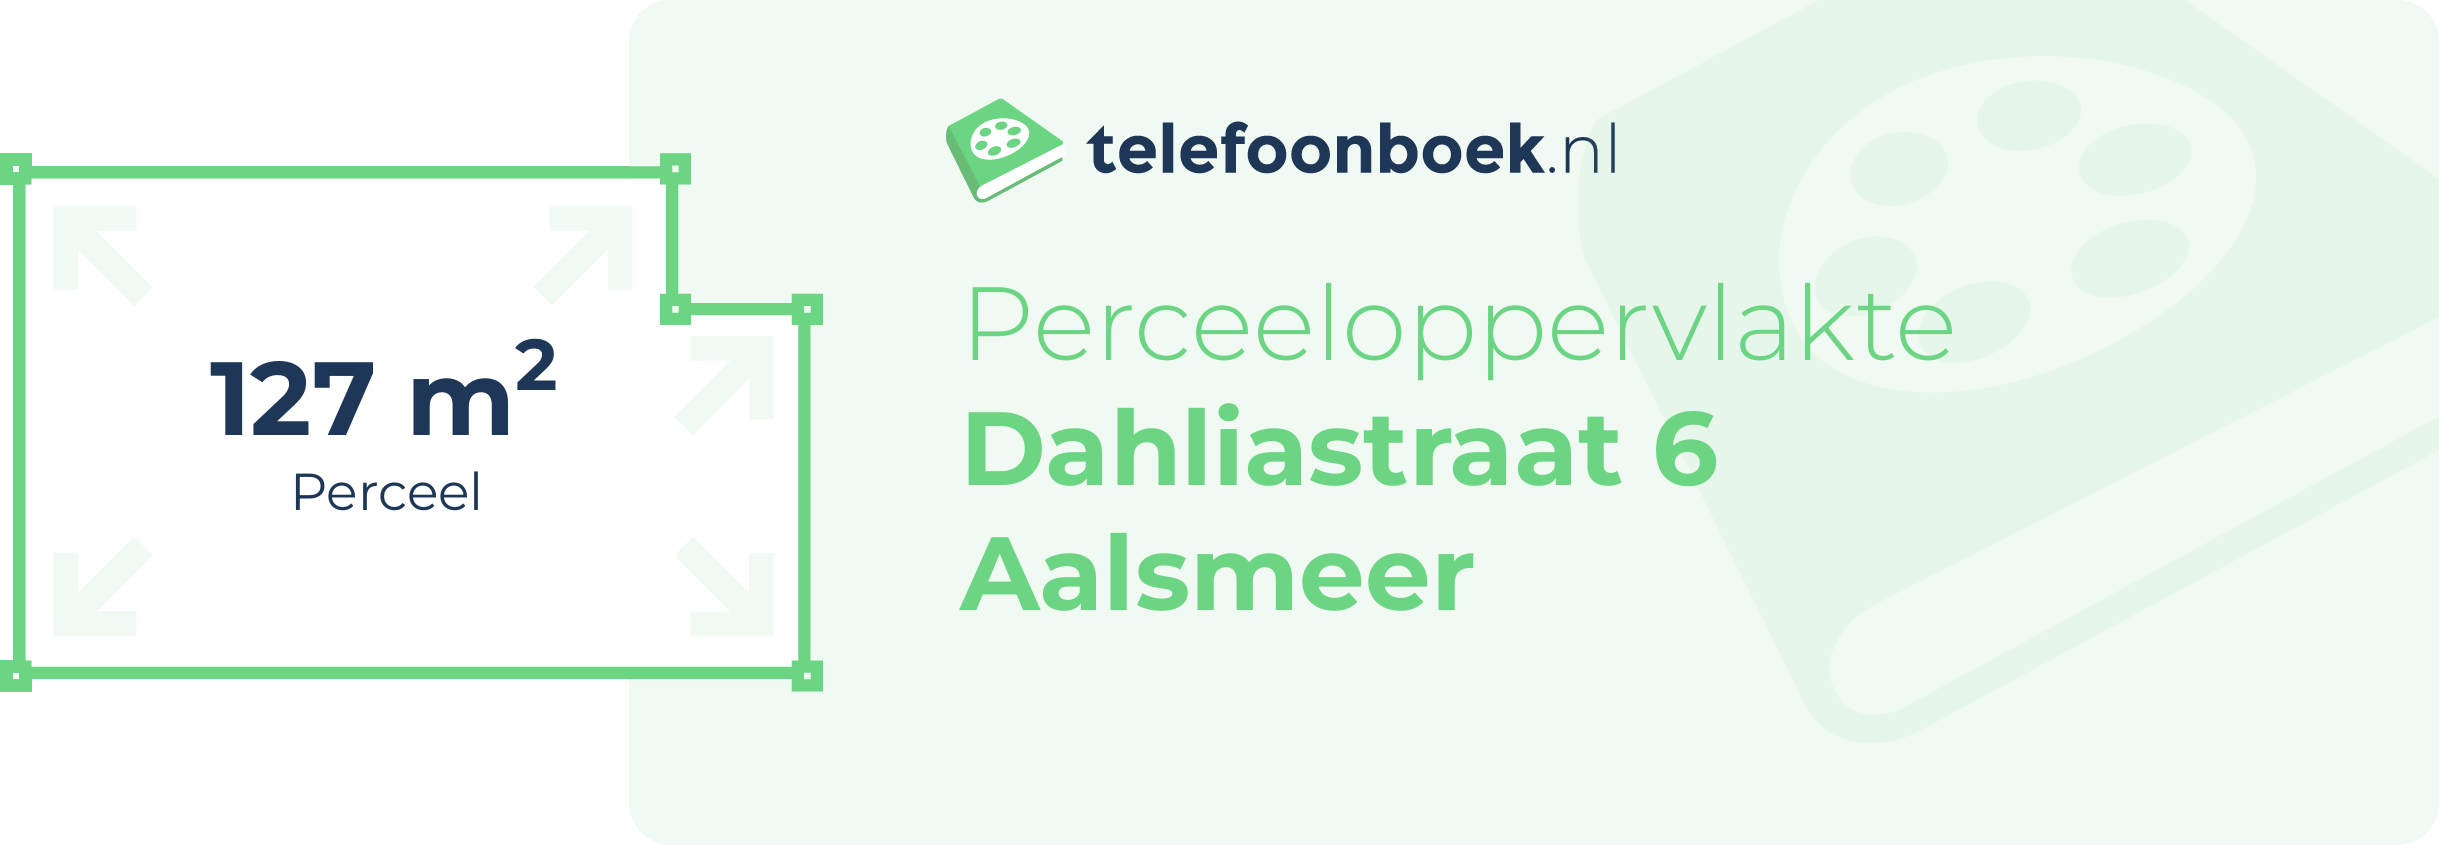 Perceeloppervlakte Dahliastraat 6 Aalsmeer